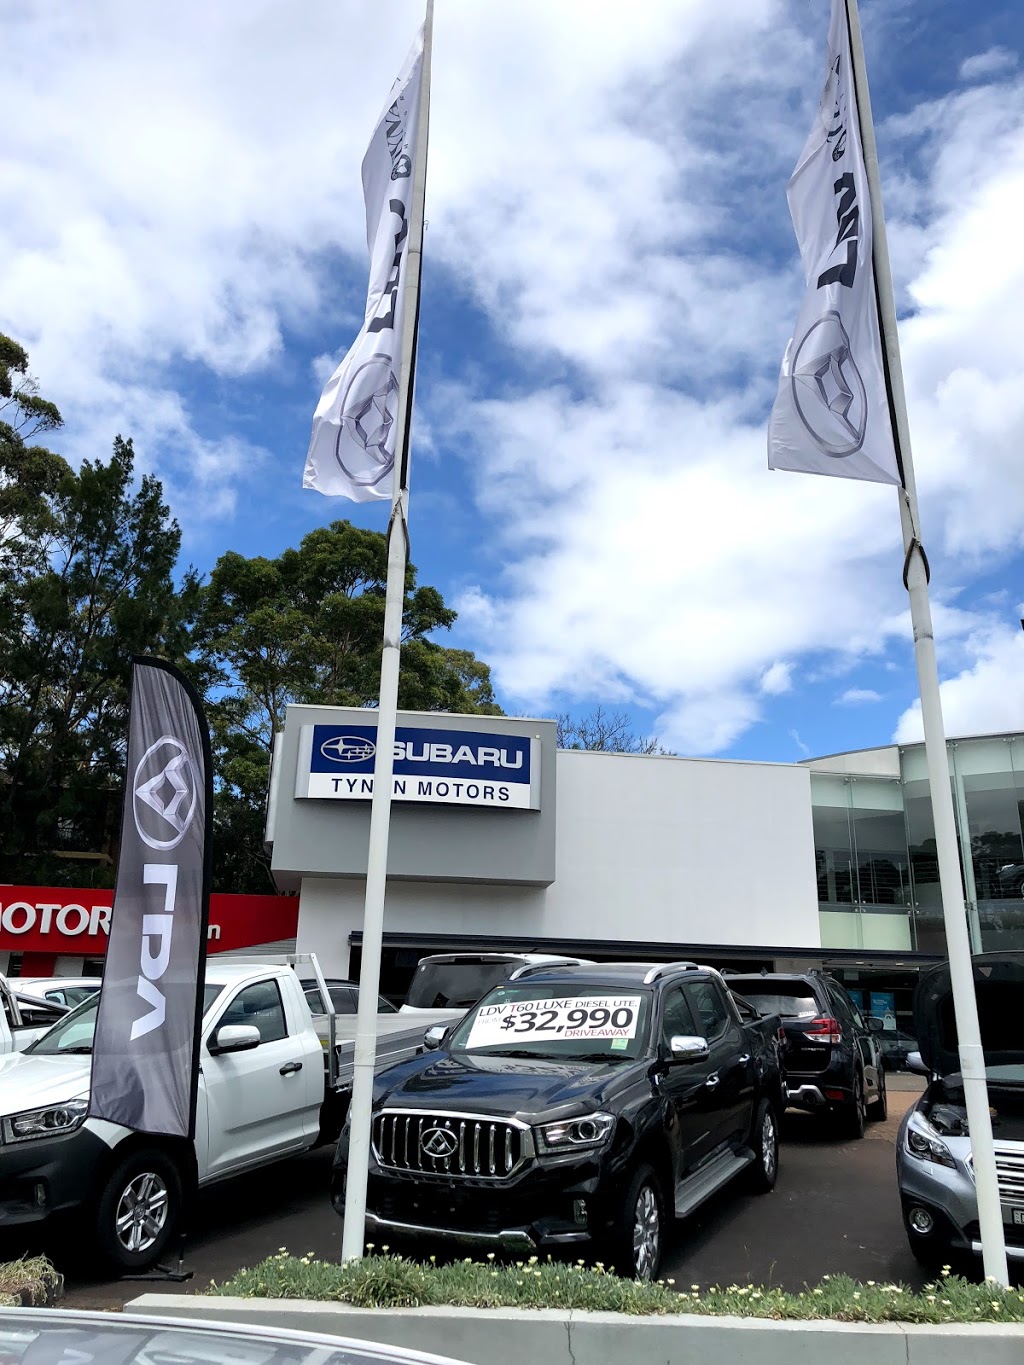 Tynan Subaru Sutherland | car dealer | 3/642-648 Old Princes Hwy, Sutherland NSW 2232, Australia | 0285458888 OR +61 2 8545 8888